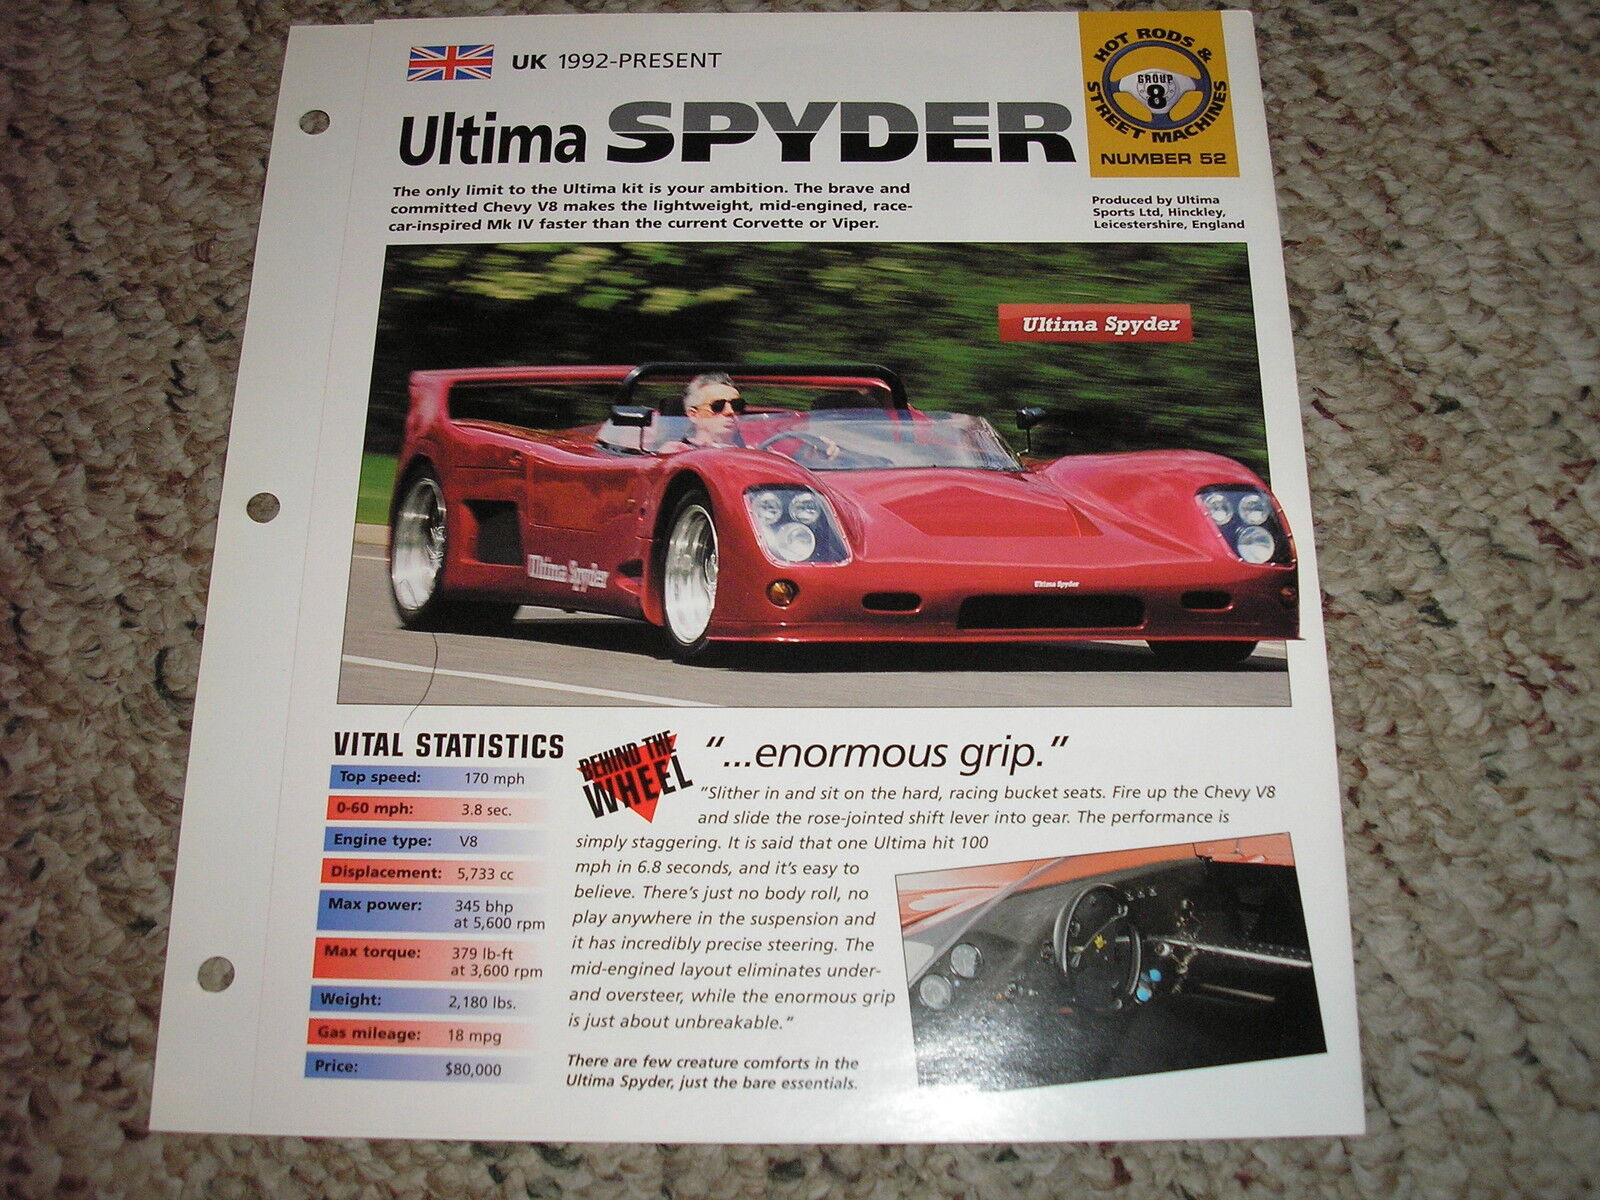 UK 1992-Present Ultima Spyder Hot Cars Group 8 # 52 Spec Sheet Brochure